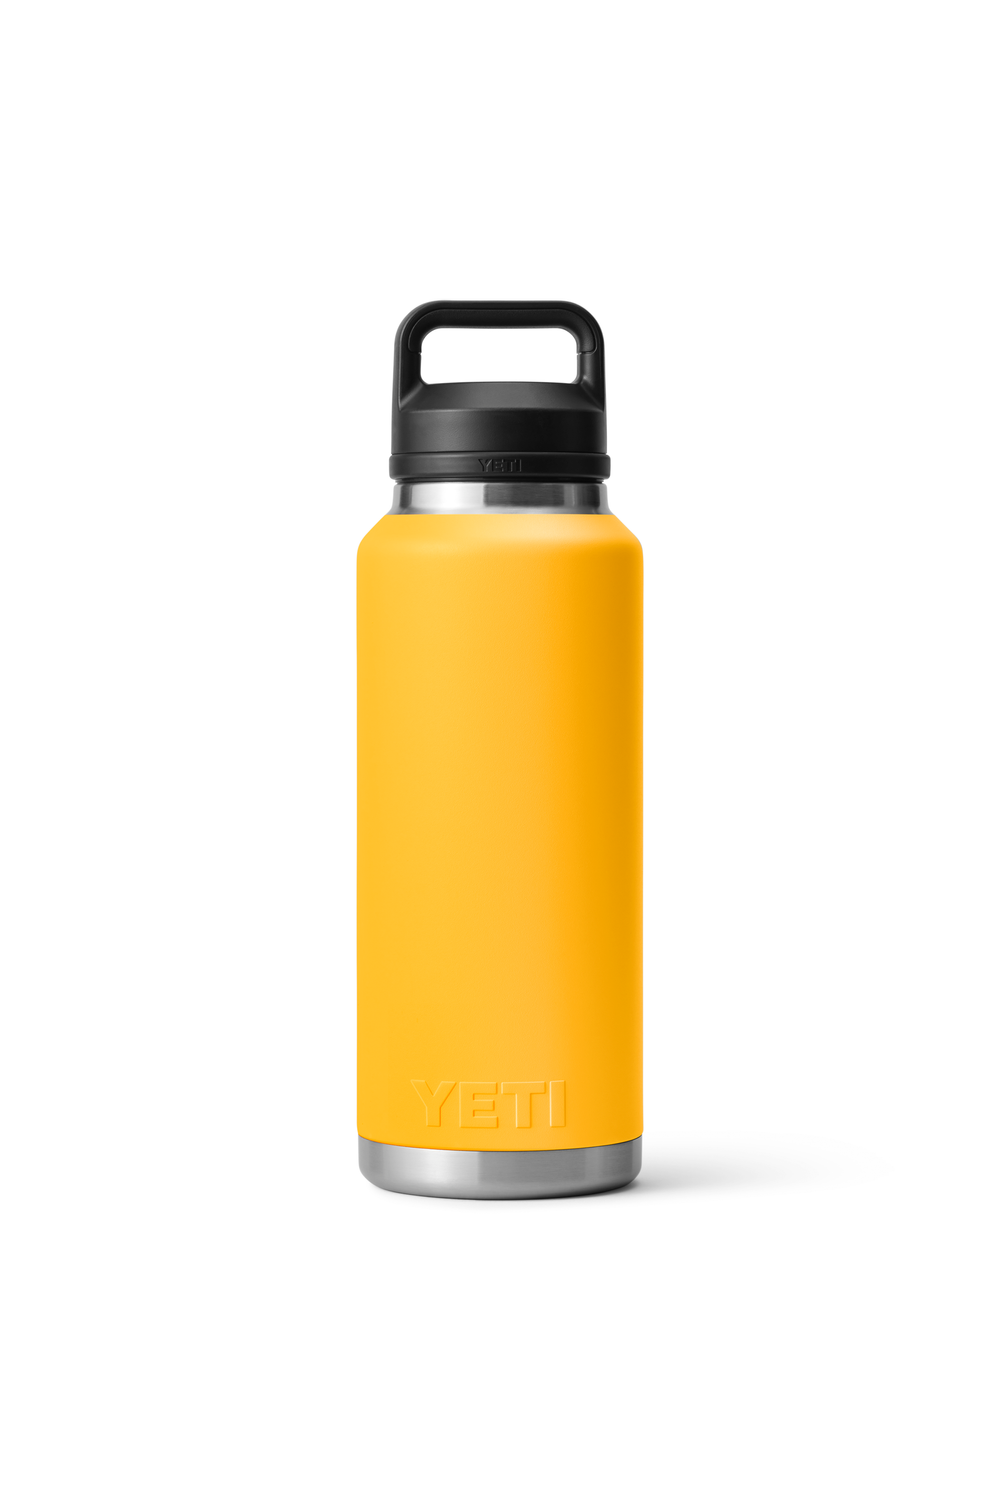 Yeti Rambler 46oz Bottle Chug Alpine Yellow